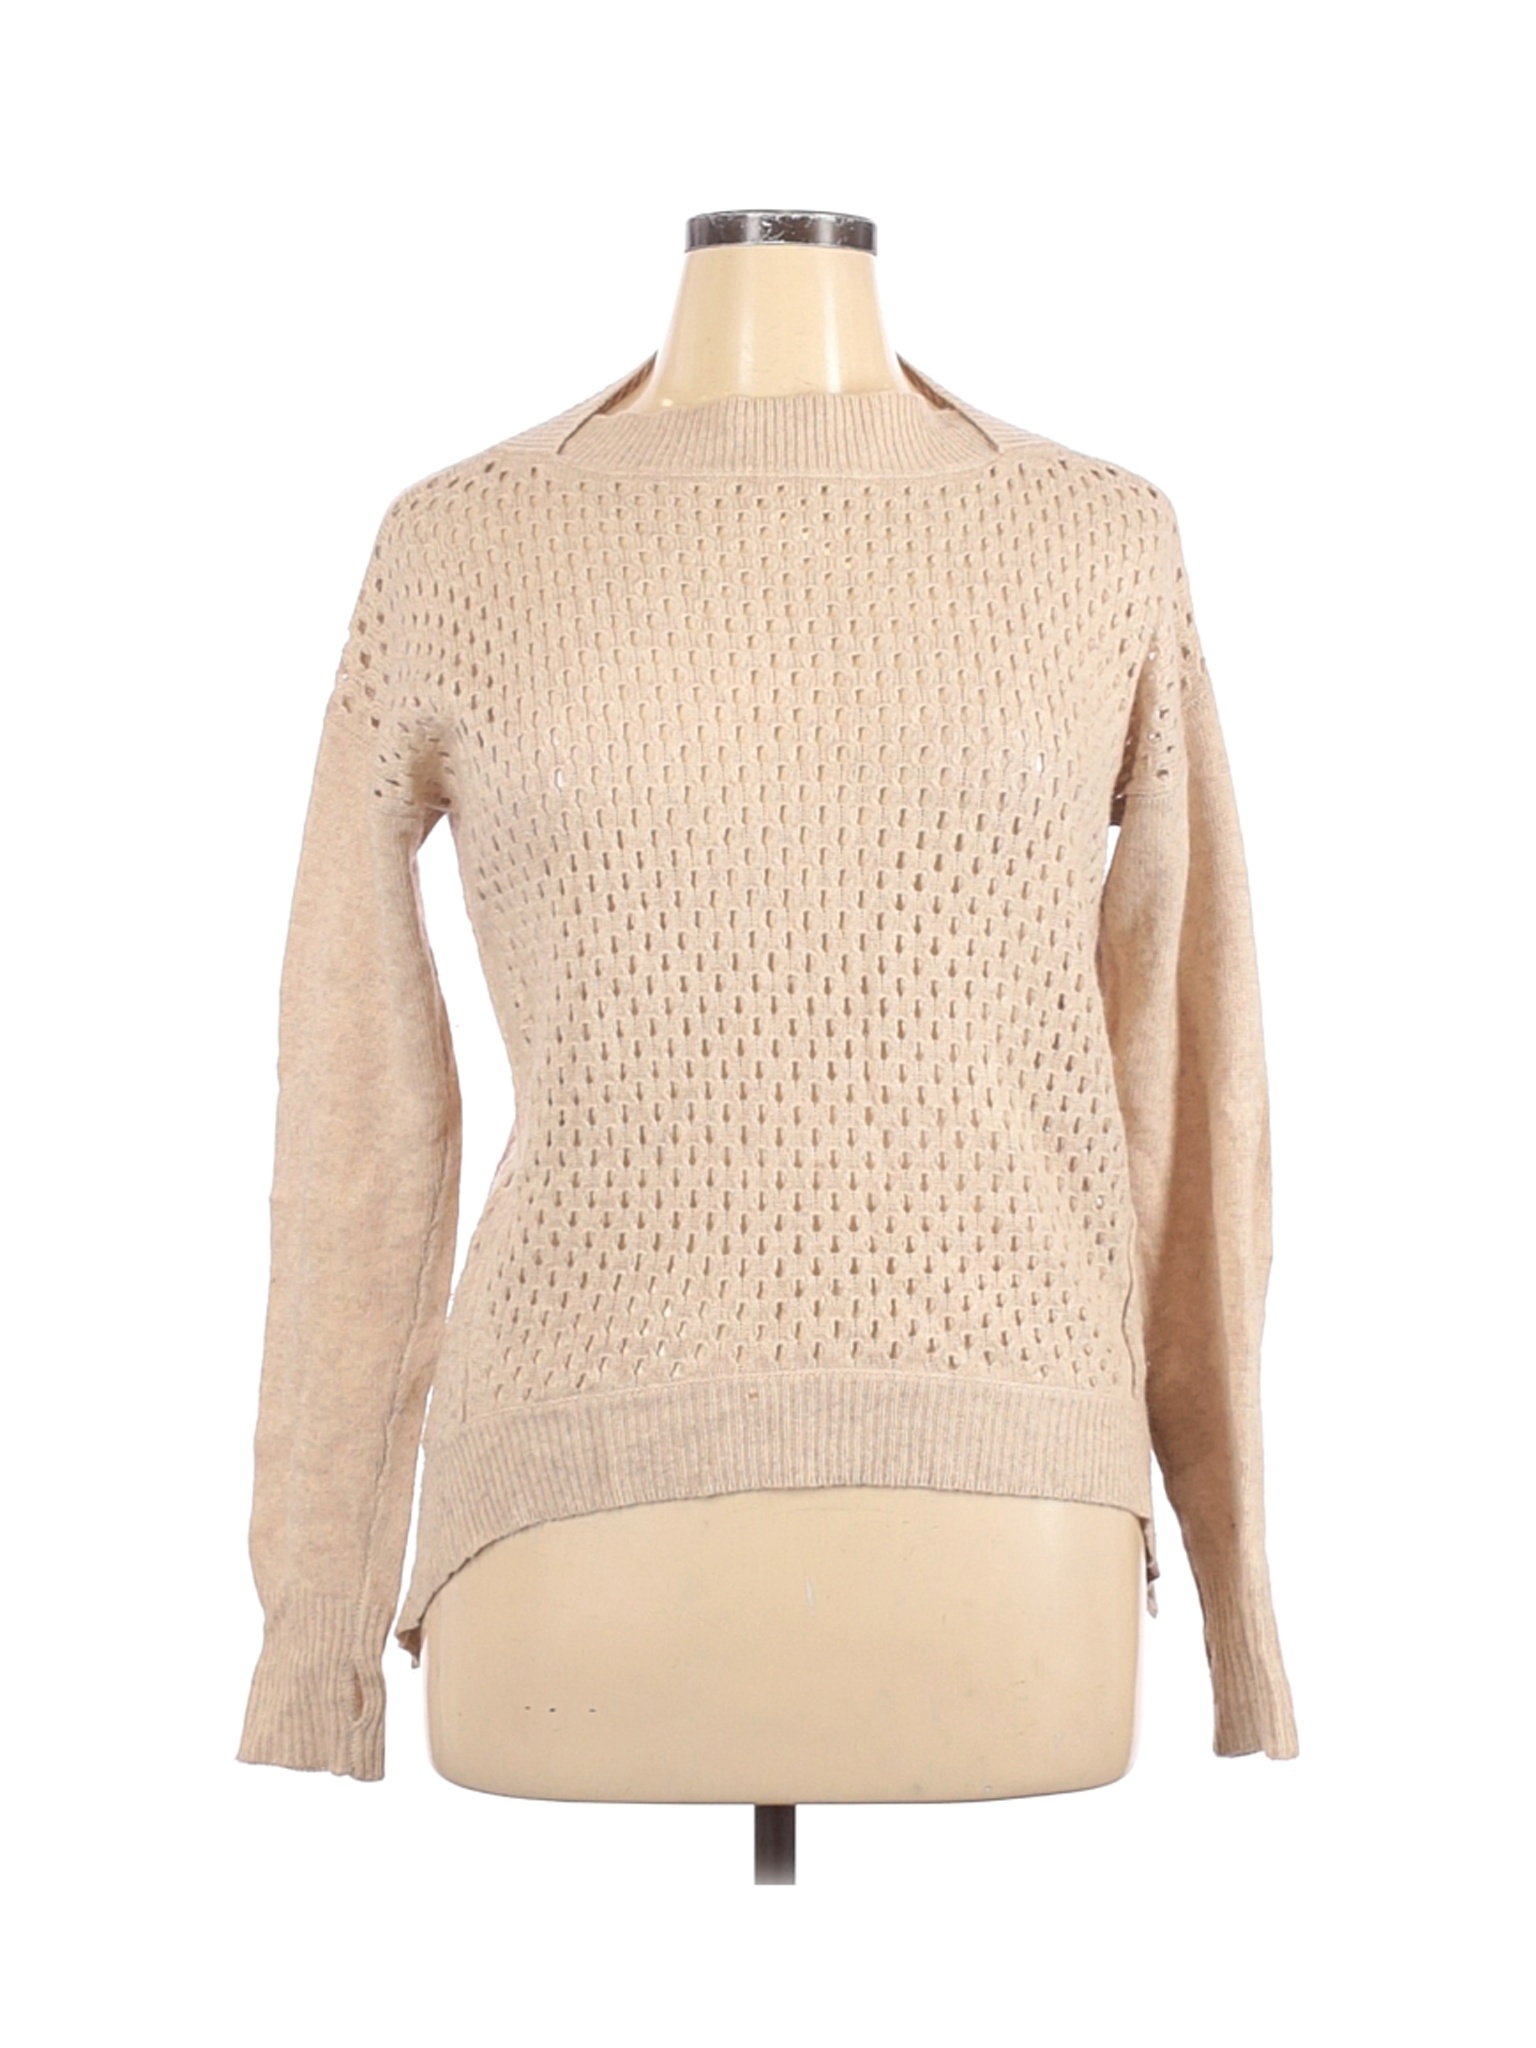 Rebecca Taylor Women Brown Wool Pullover Sweater L | eBay